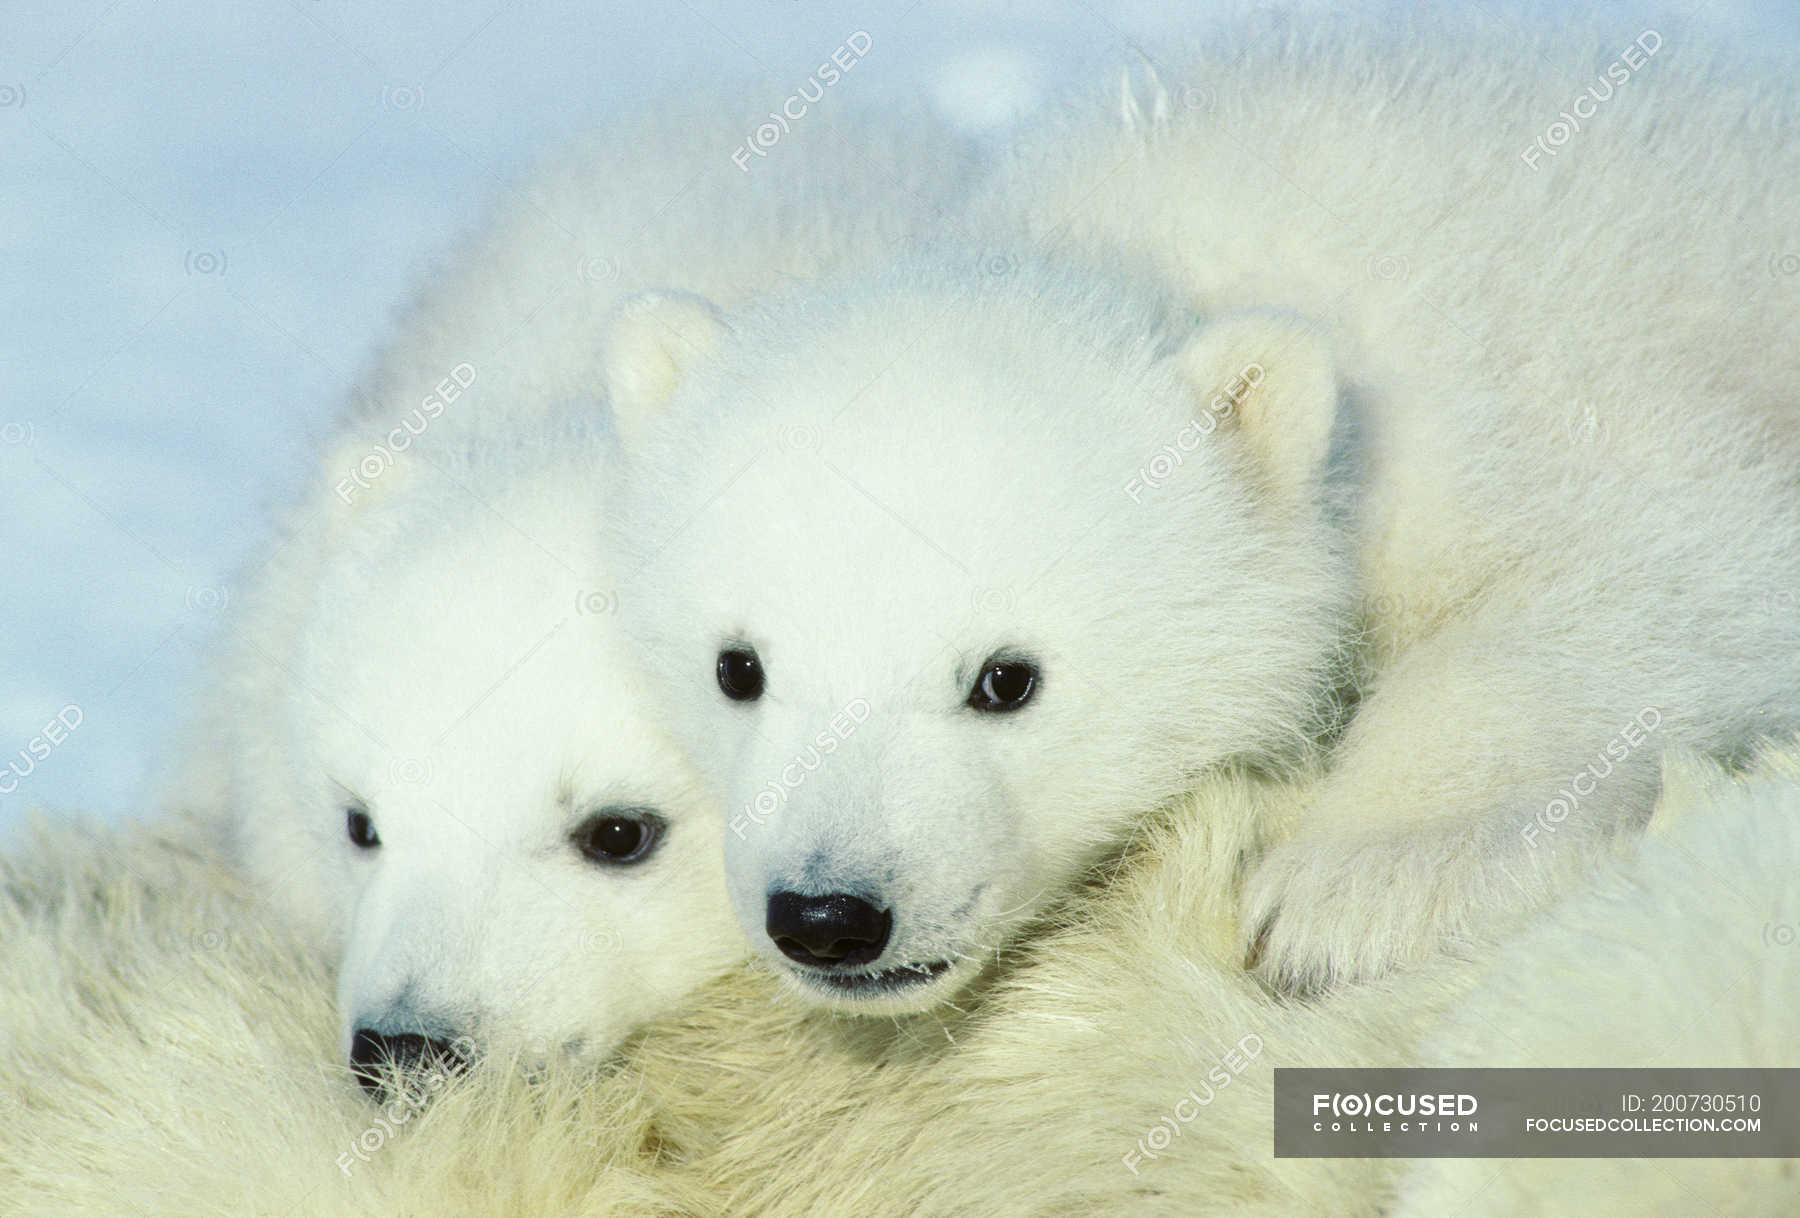 polar bears cuddling